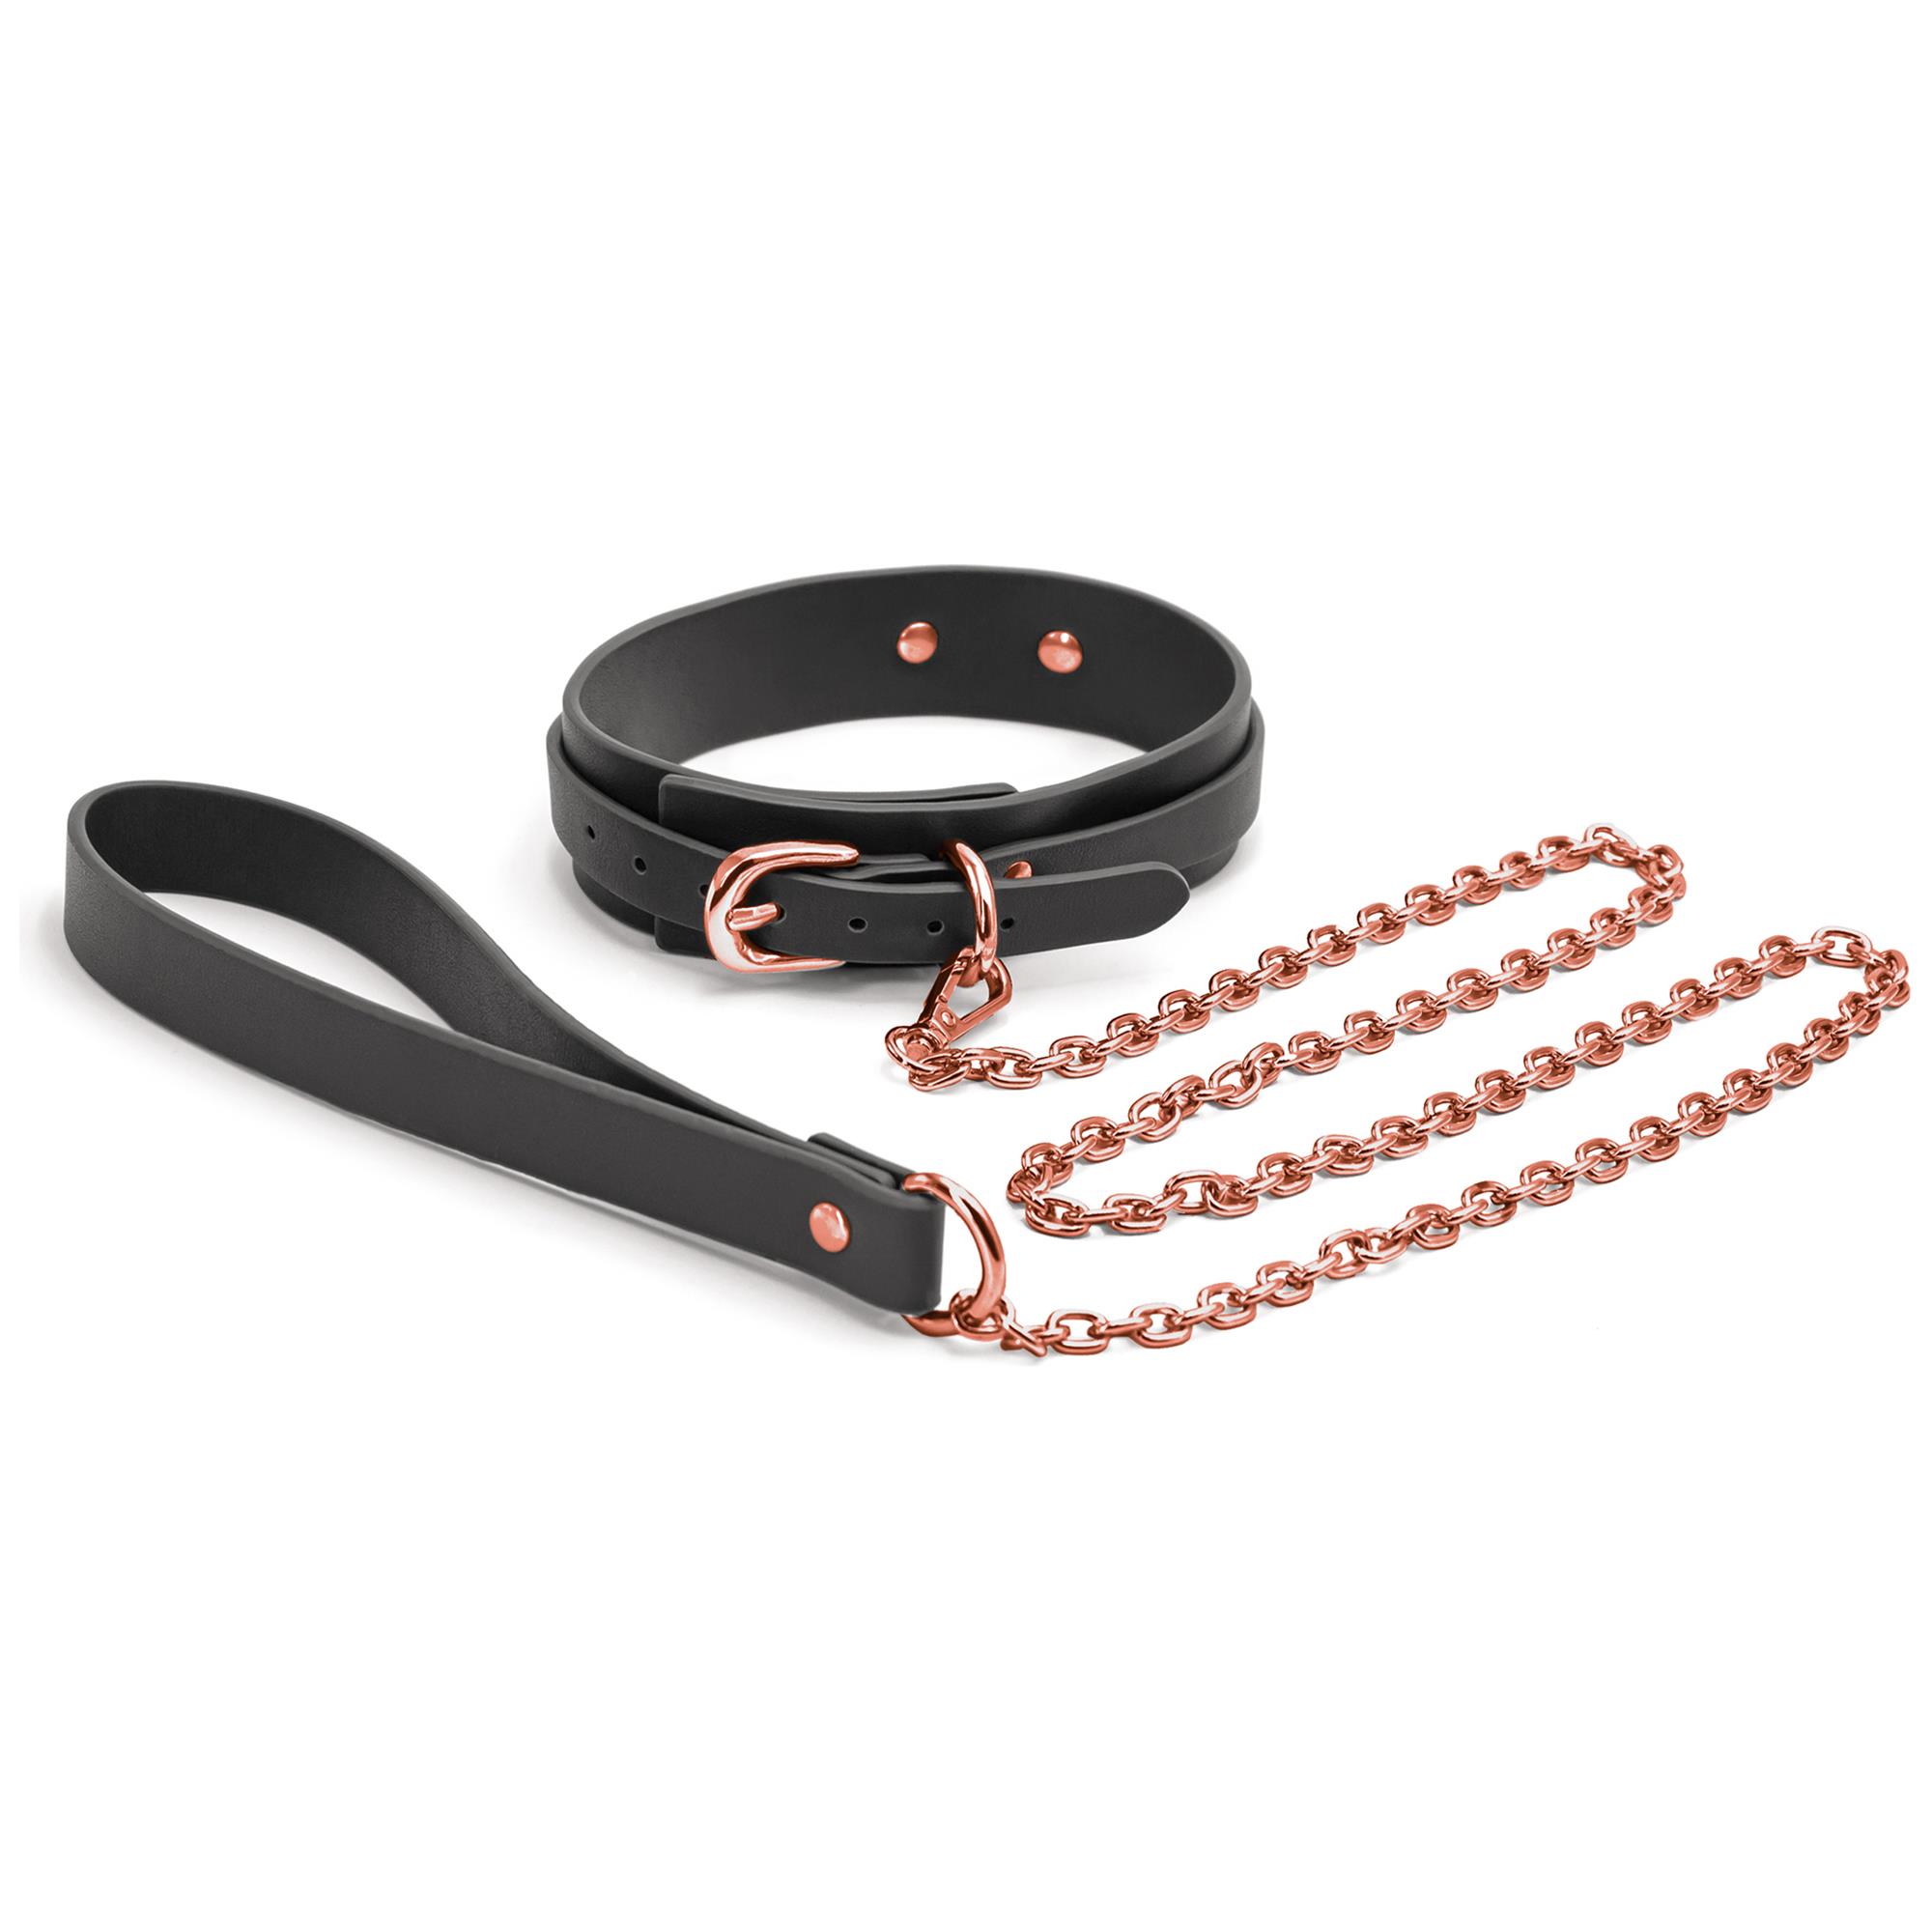 BDSM Collar - And Leash Black